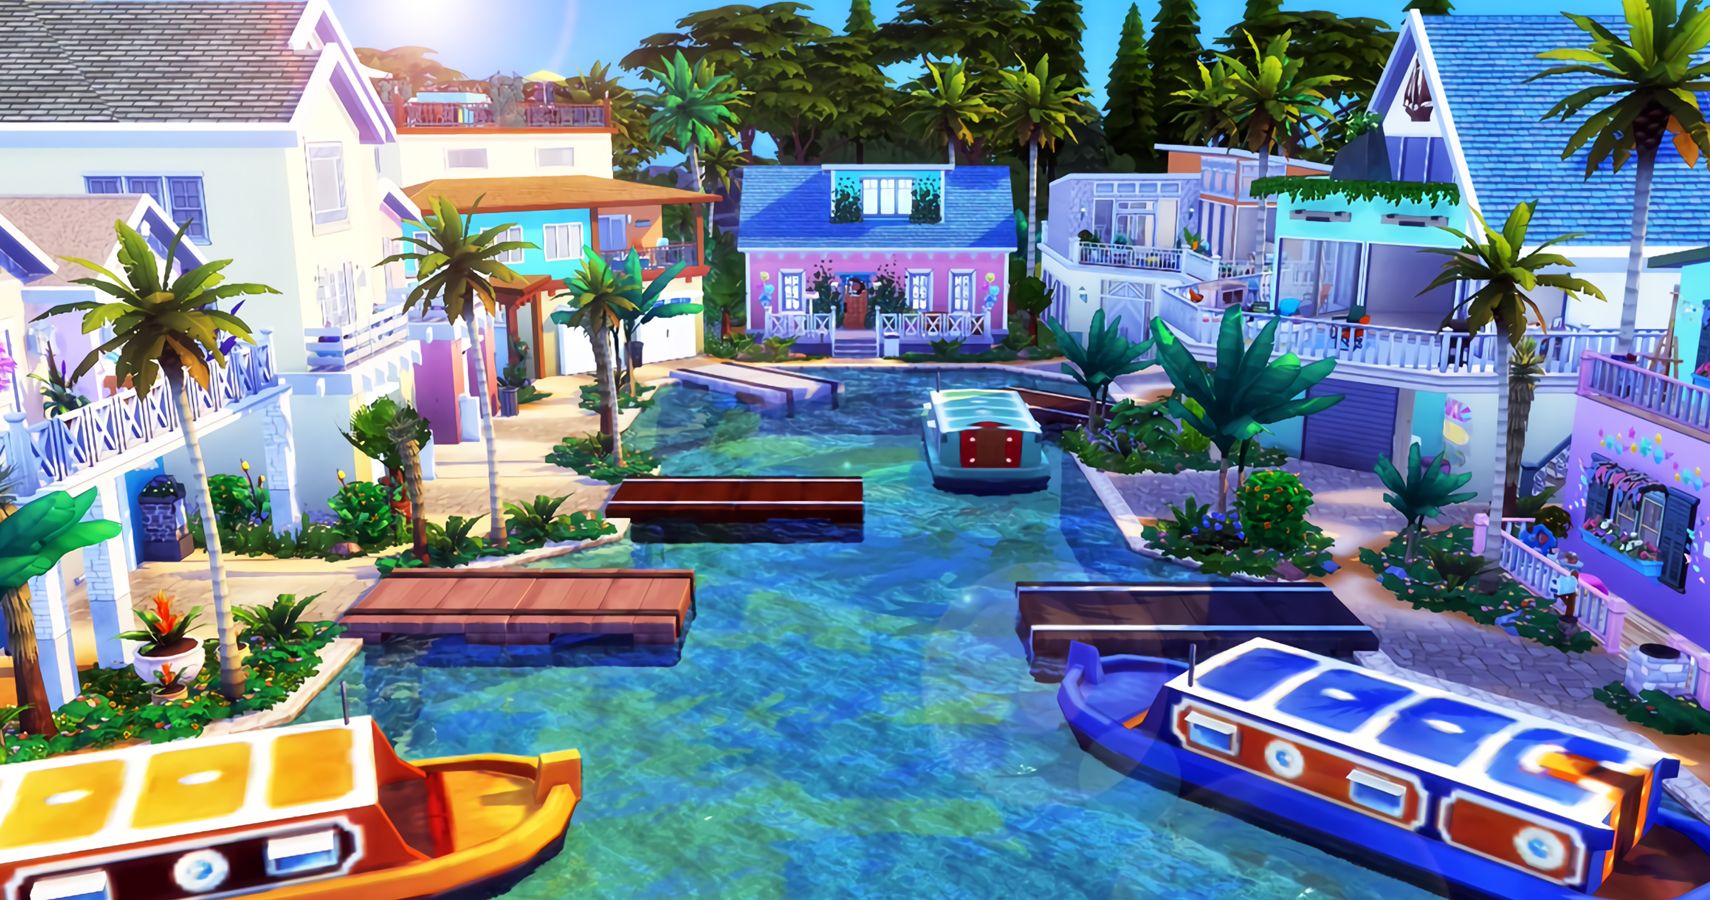 tropical getaway mod sims 4